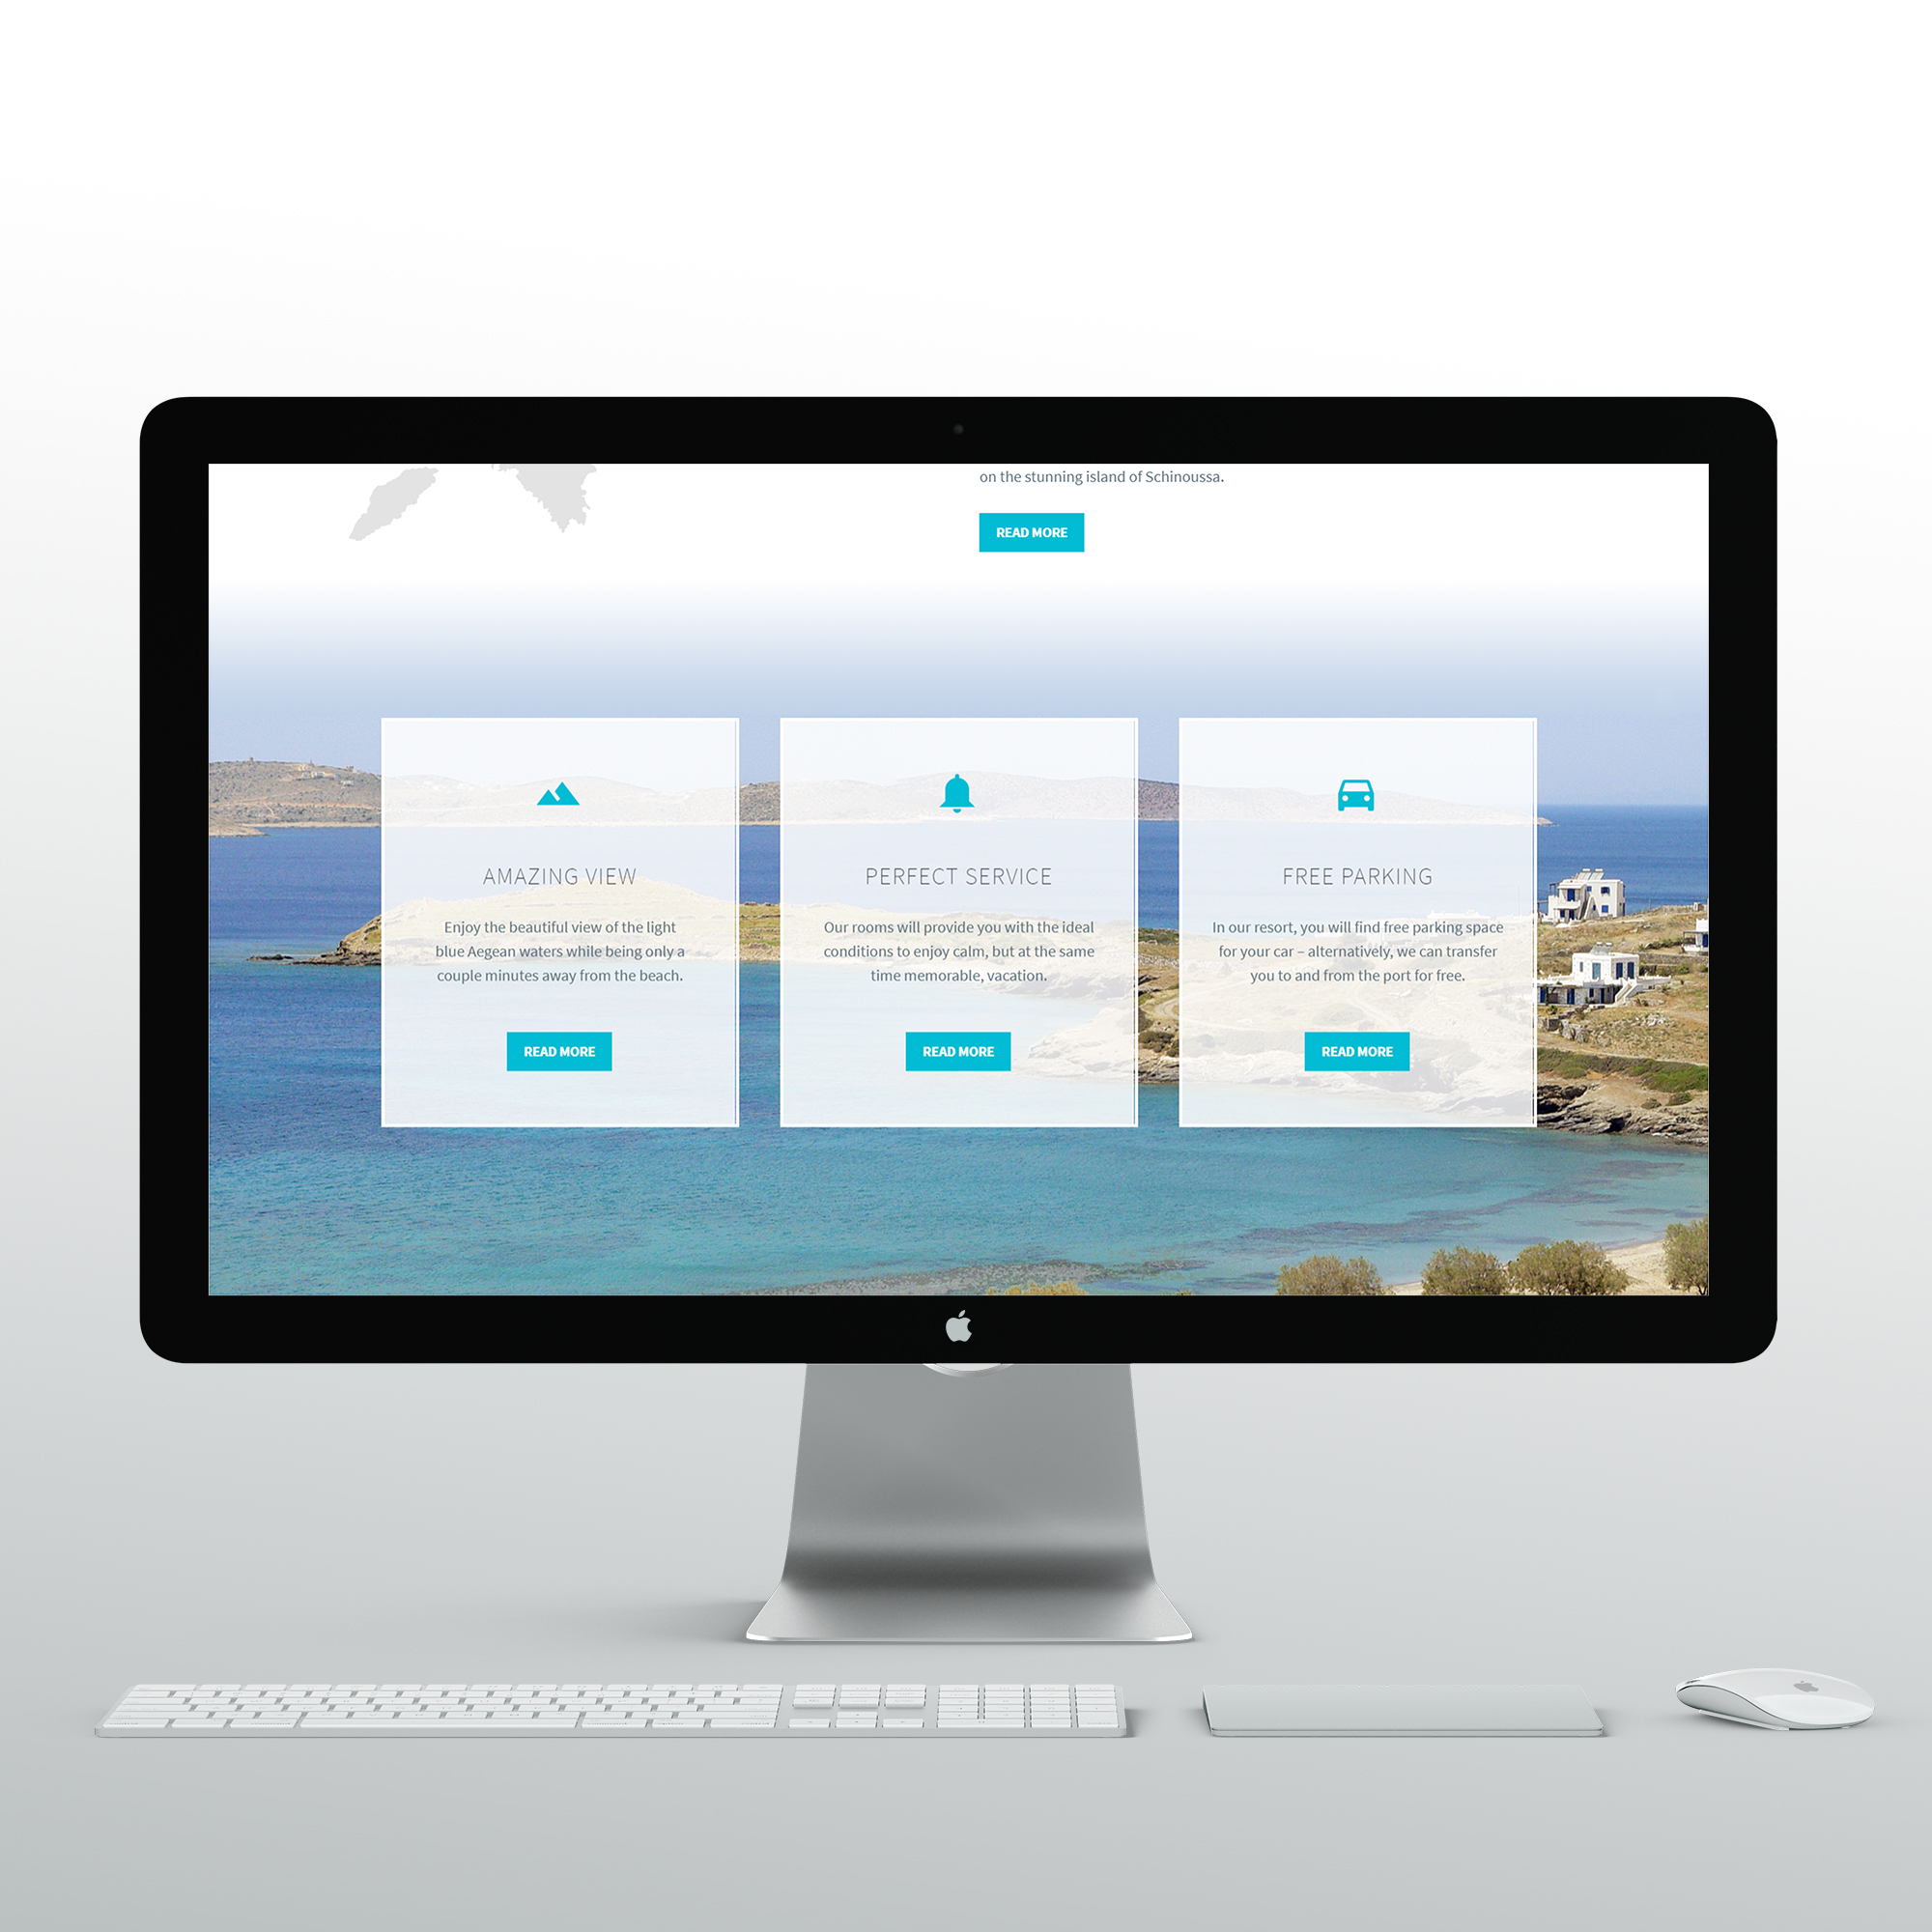 An iMac with part of Tholari Studios website